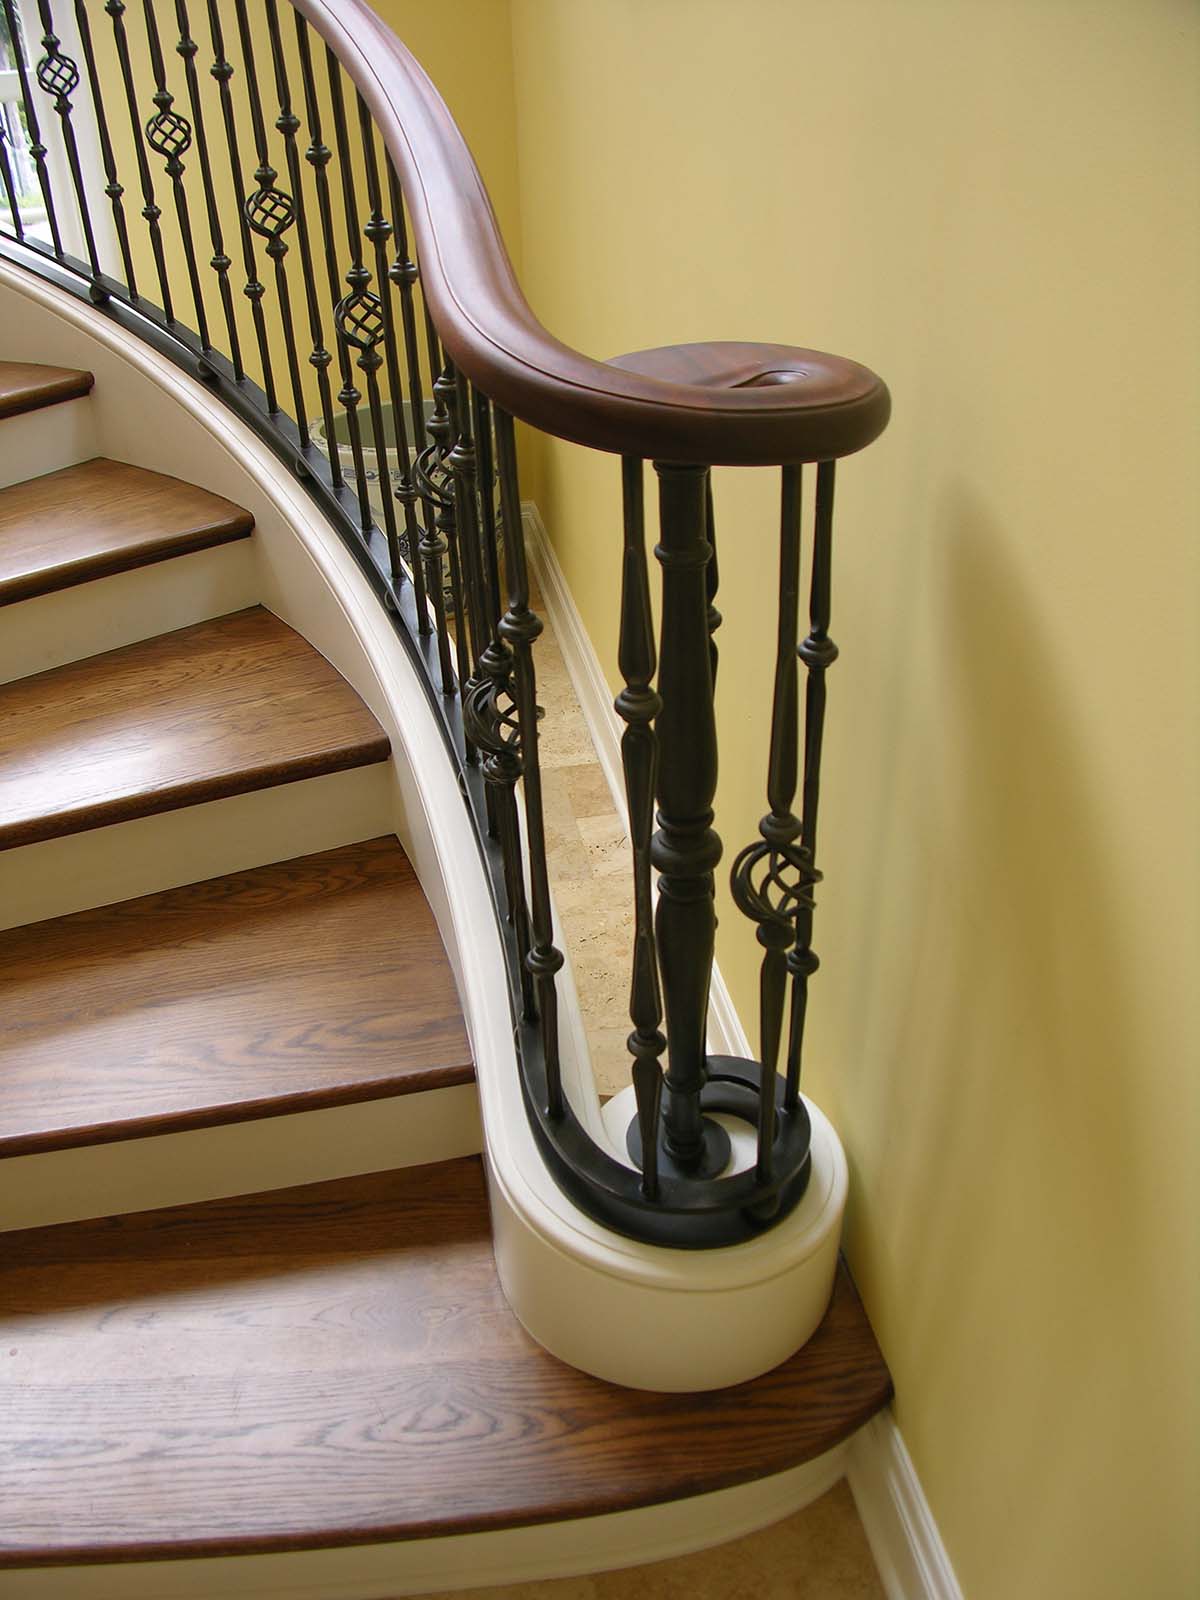 mw design workshop custom stairs rail